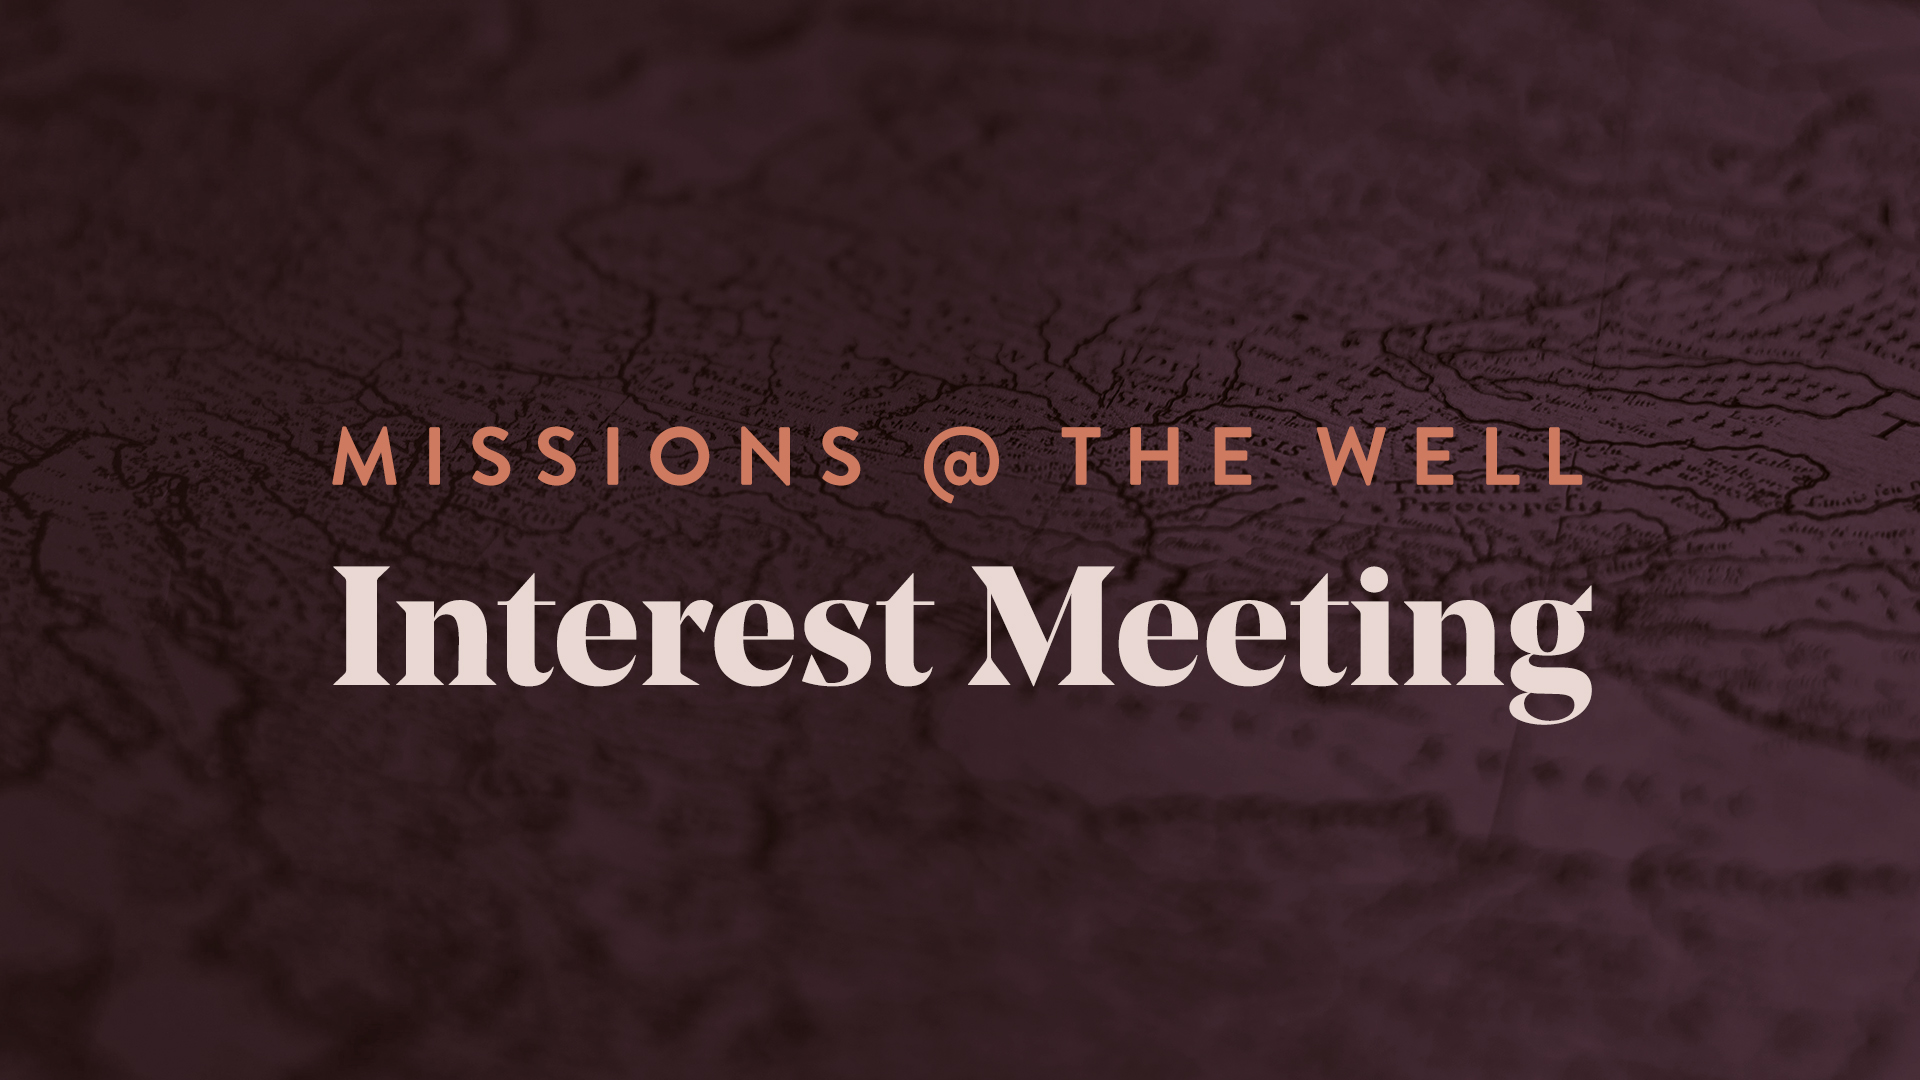 Interest Meeting2 image